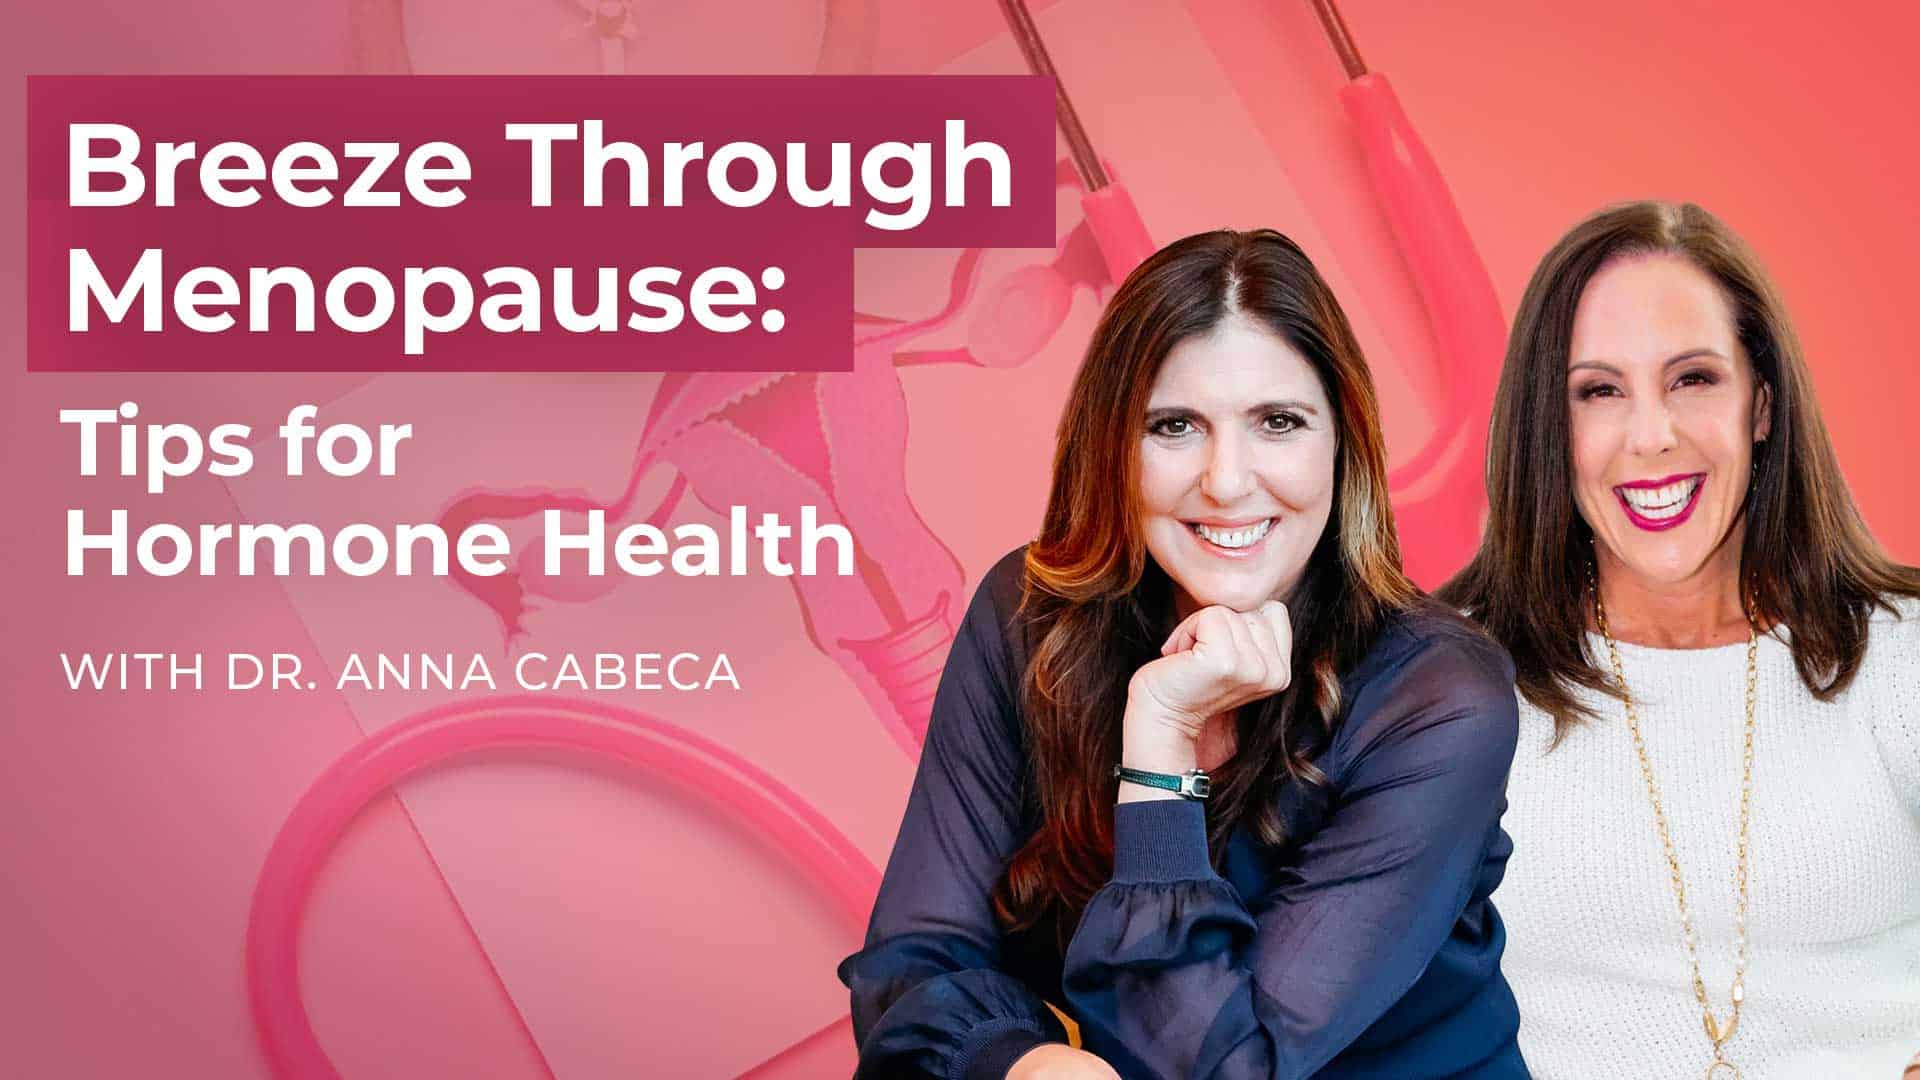 138: Dr. Jill interviews Dr. Anna Cabeca on Breezing Through Menopause